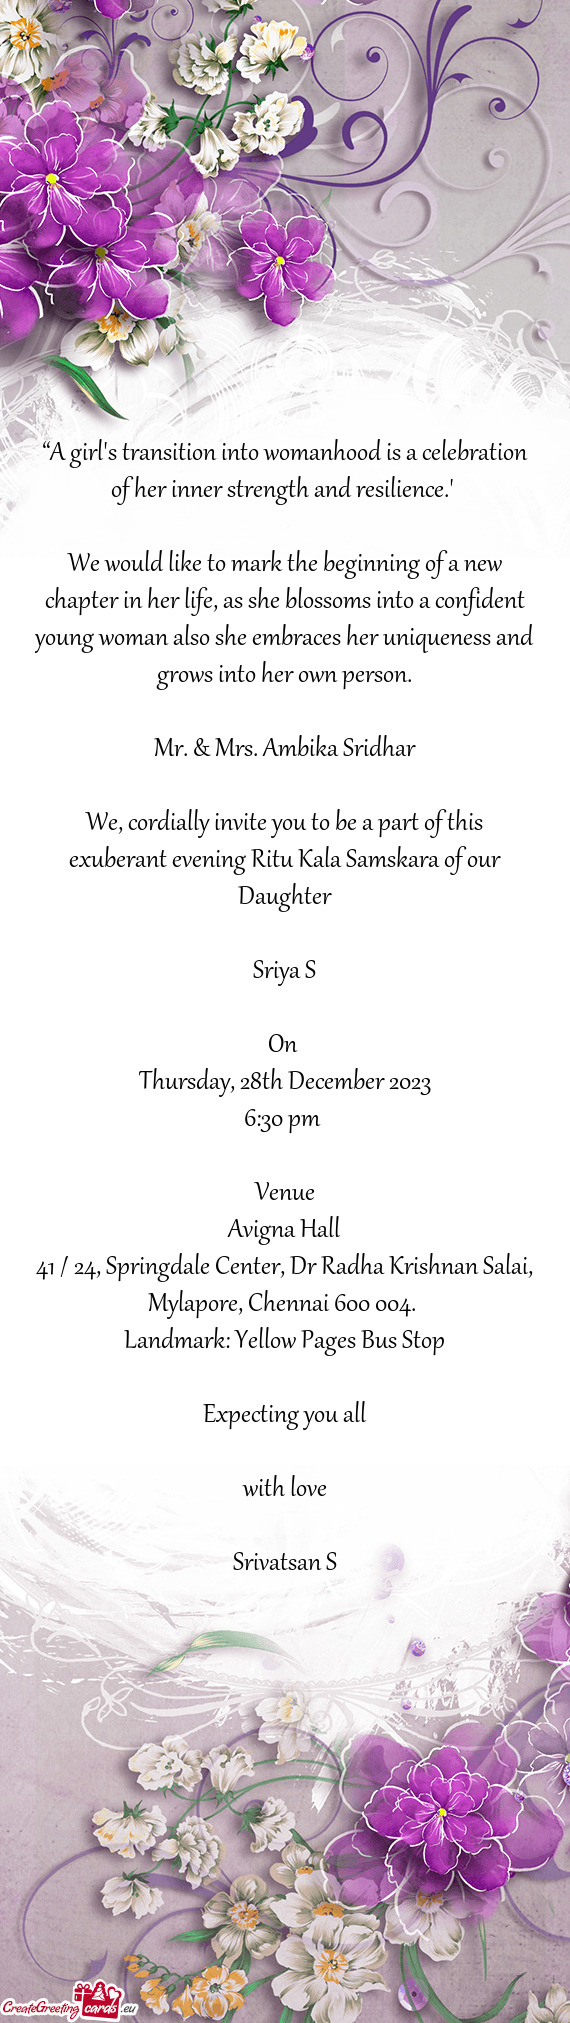 Mr. & Mrs. Ambika Sridhar